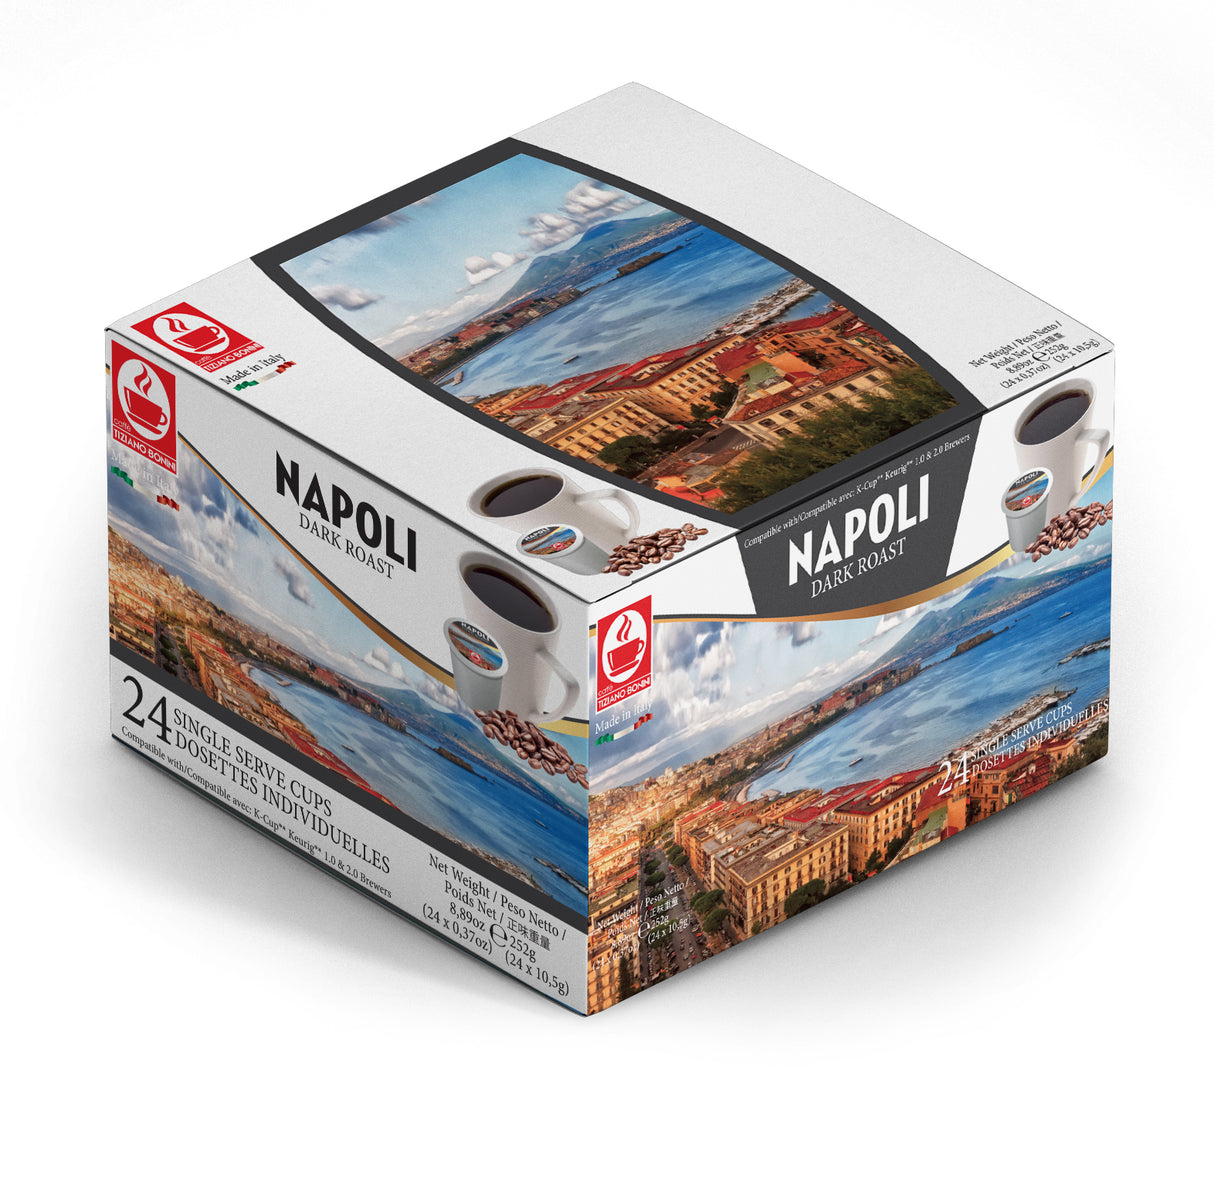 Tiziano Bonini Napoli Dark Roast Keurig K-Cup Compatible Pods 24 Pack's